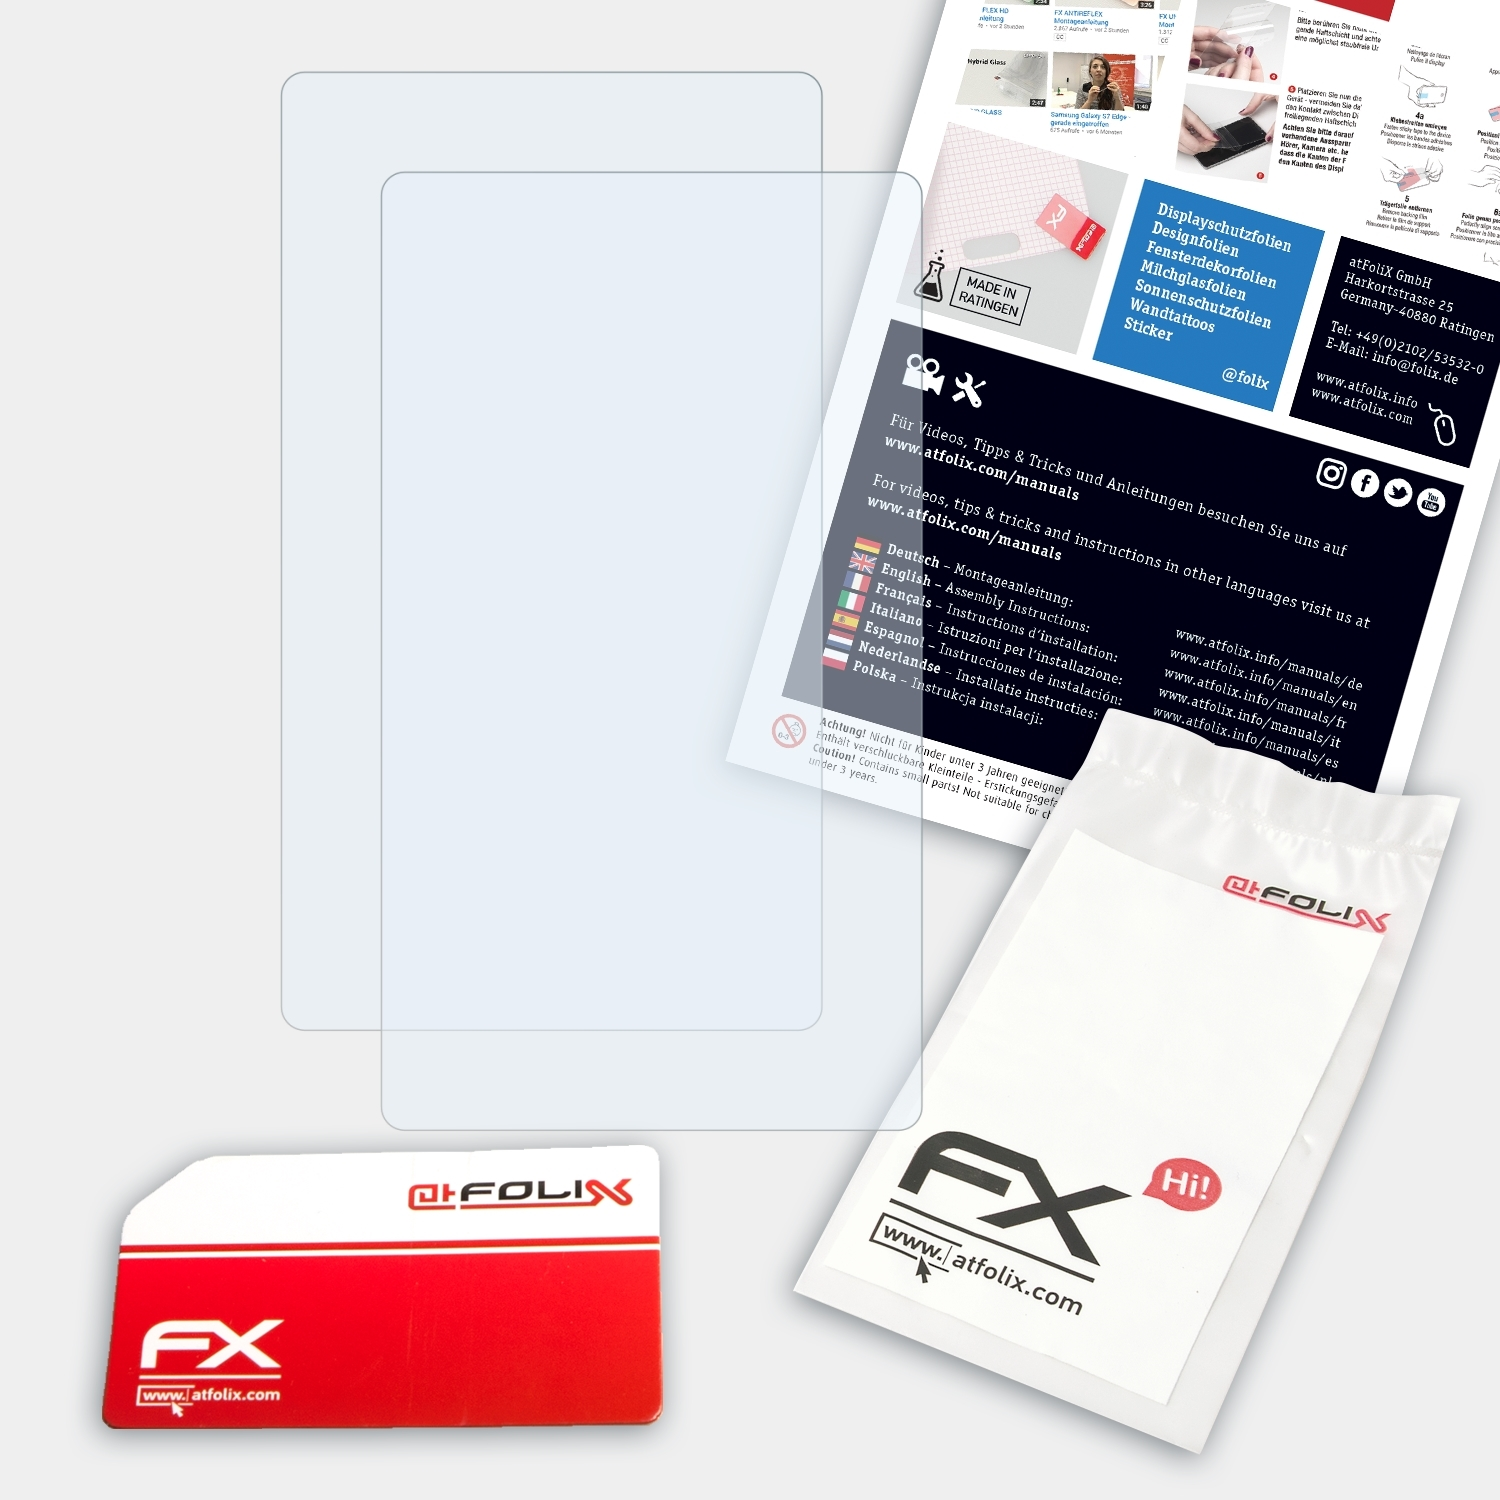 FX-Clear 2x Sportstech F50) Laufband ATFOLIX Displayschutz(für